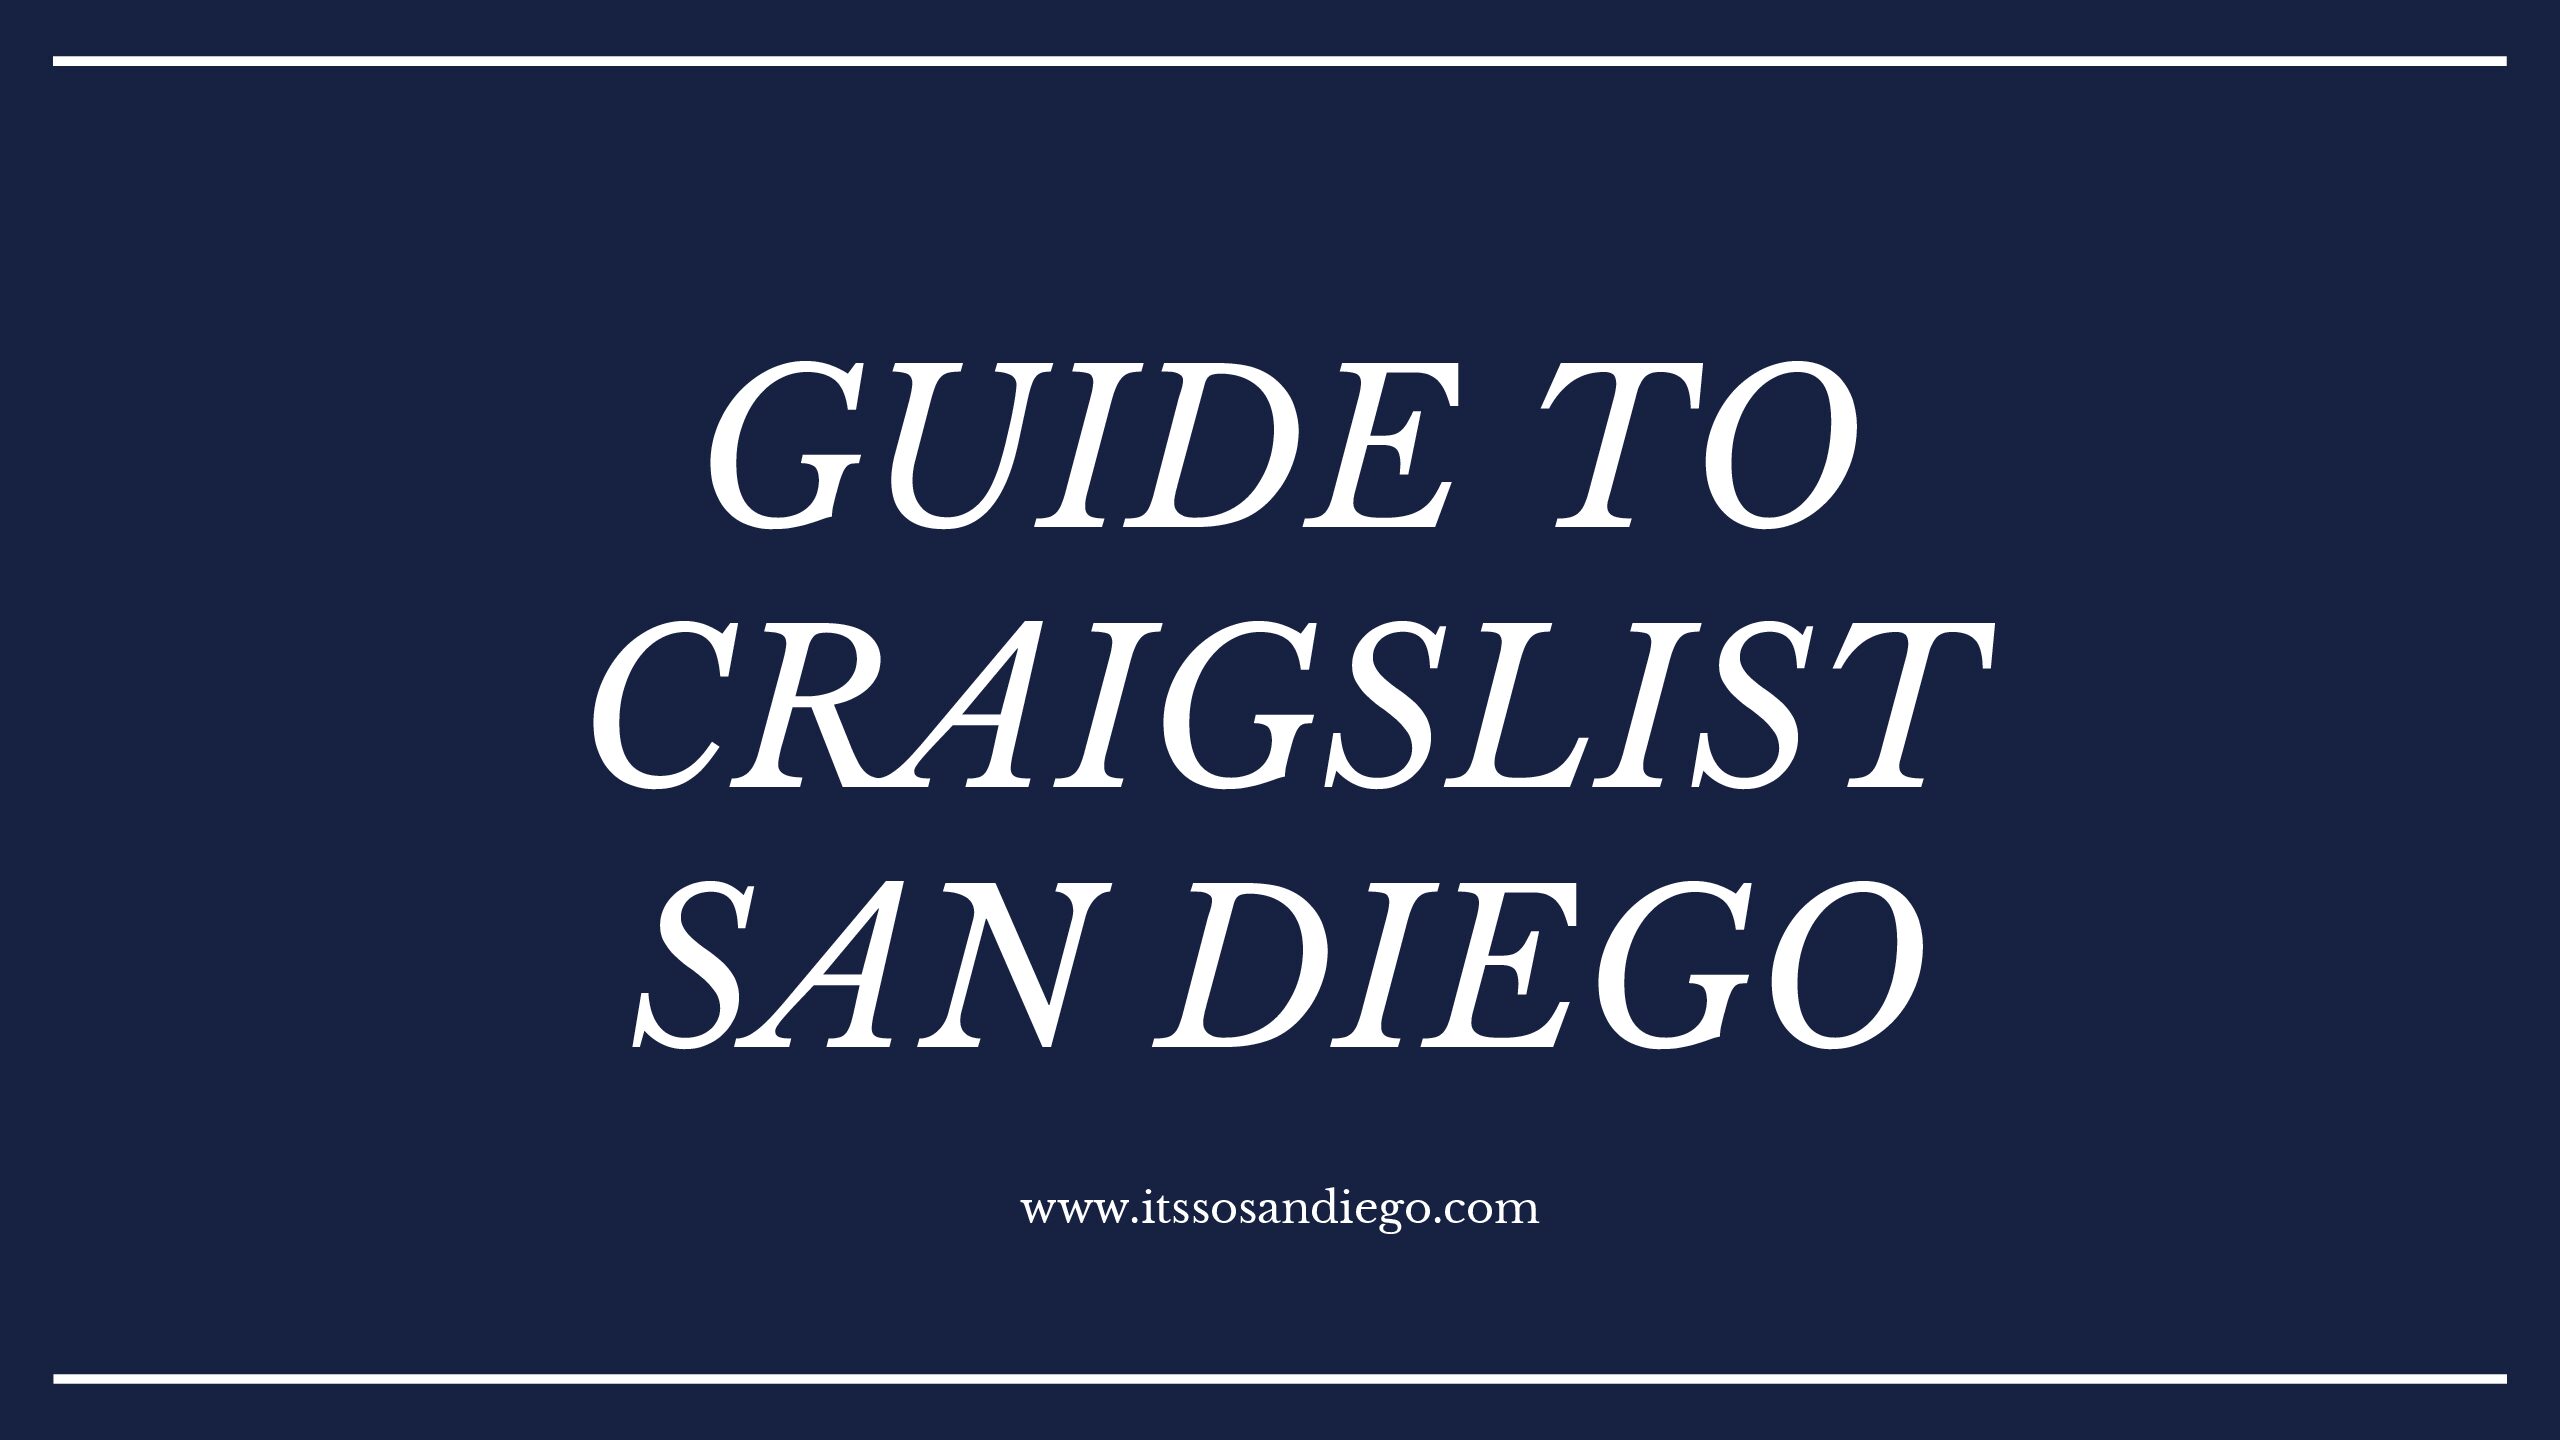 david glaza recommends San Diego Craglist Com